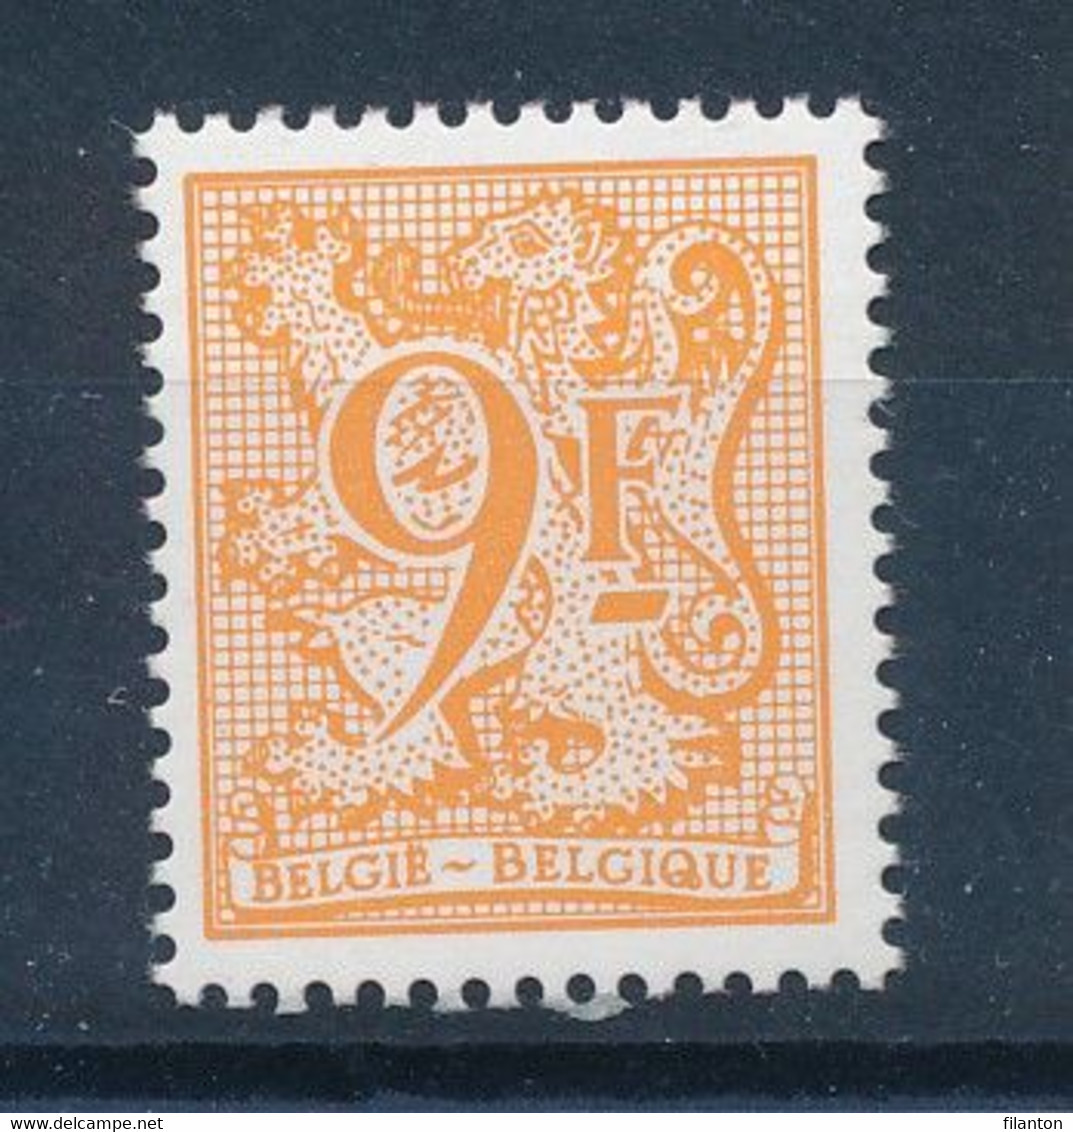 BELGIE - OBP Nr 2159 P6 (groene Gom/gomme Verdâtre) - Cijfer Op Heraldieke Leeuw - MNH** - 1977-1985 Figuras De Leones